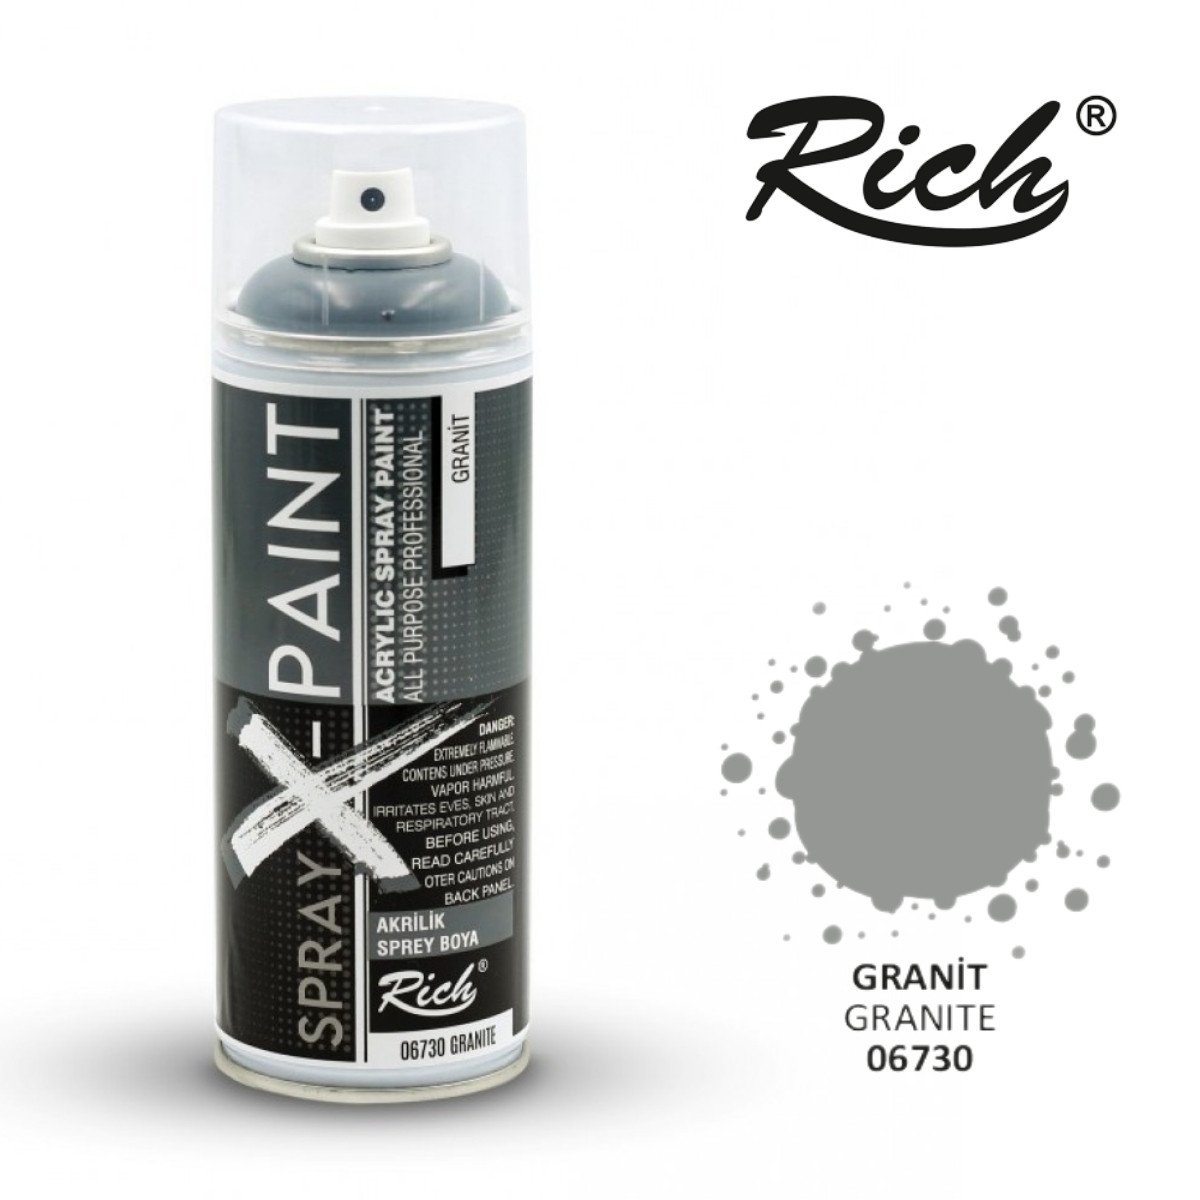 Rich X Paint Sprey Boya 400ml 06730 Granit